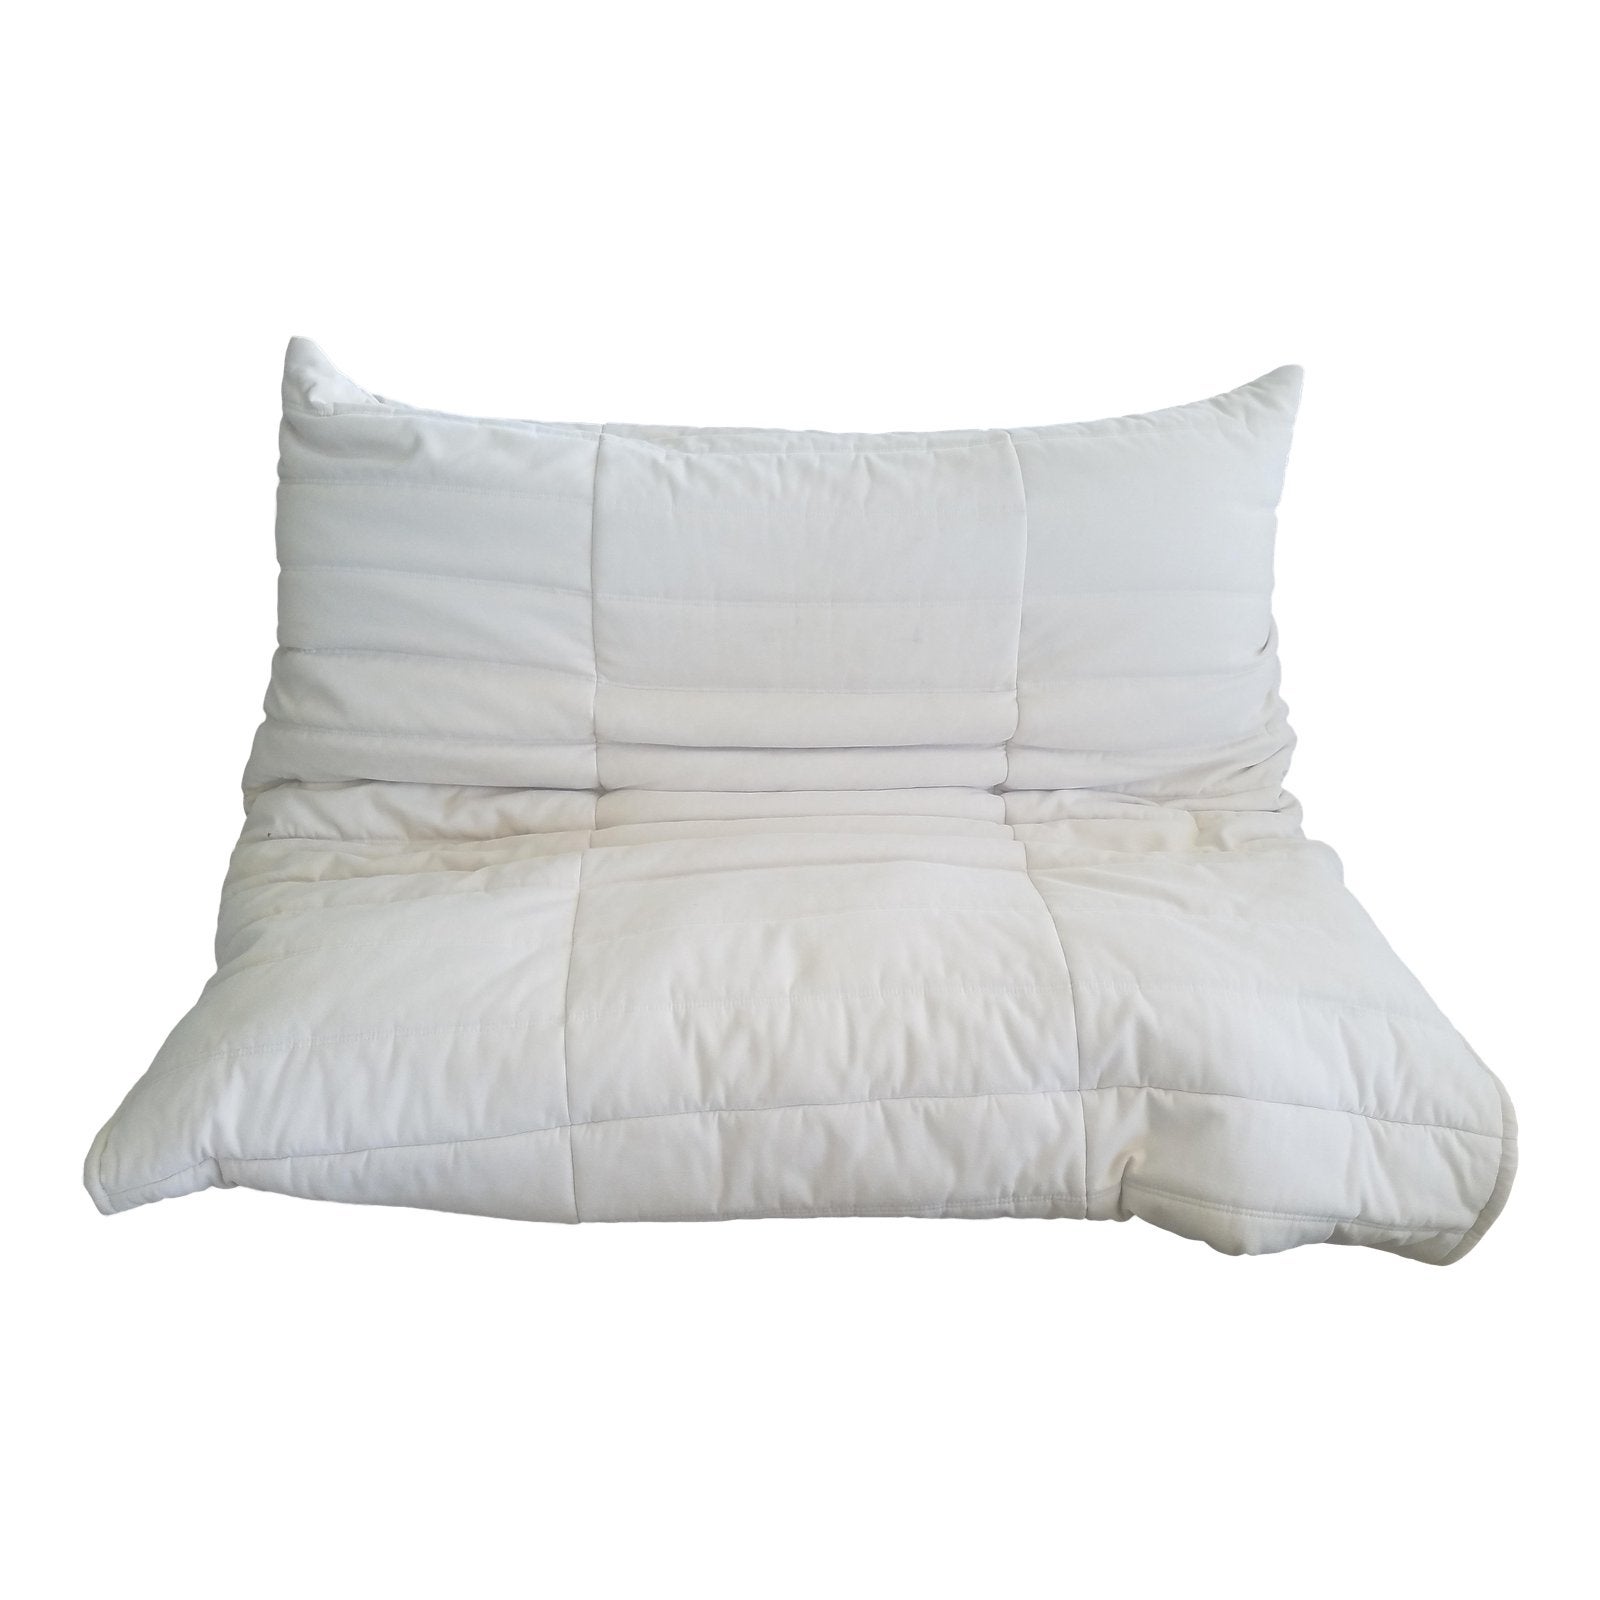 post-modern-ligne-roset-michel-ducaroy-sofa-bed-futon-4976